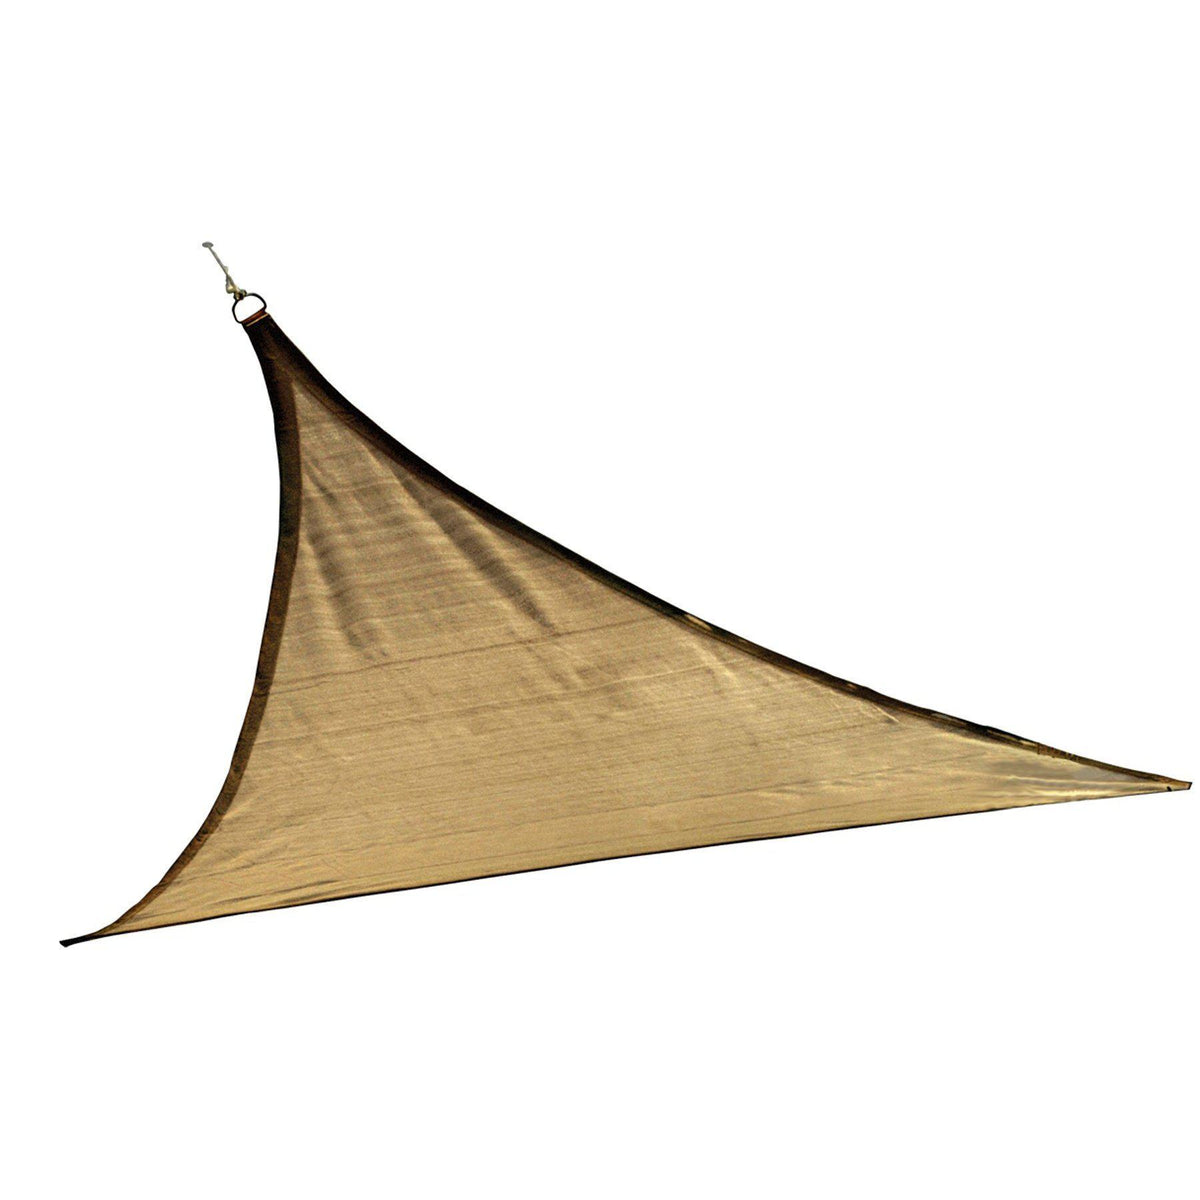 ShelterLogic Triangle Shade Sail, Sand, 16 x 16 x 16 ft.